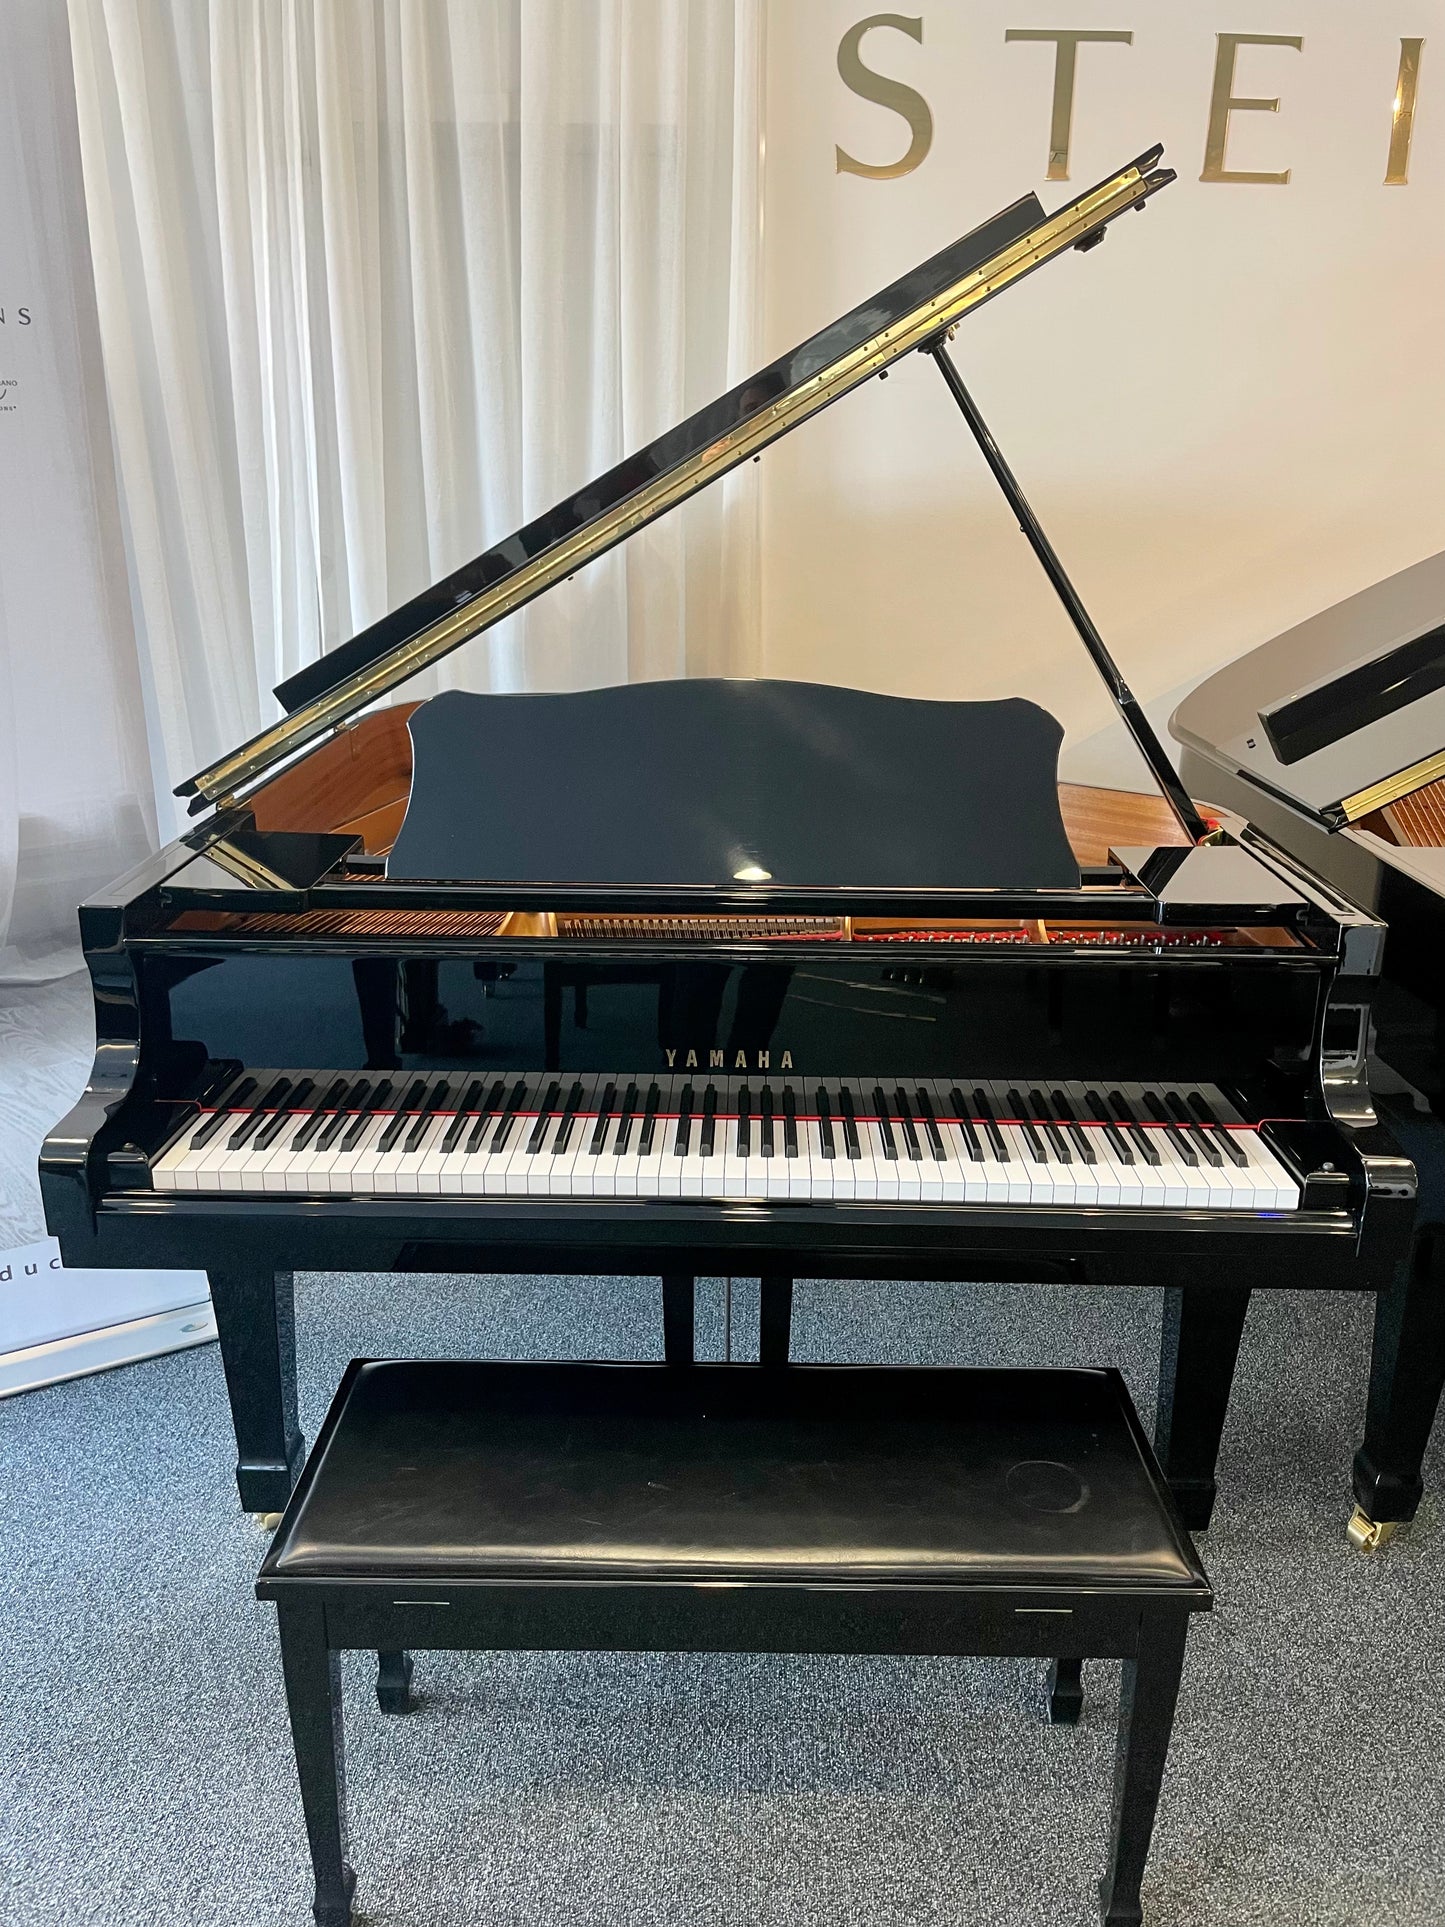 Yamaha grand piano Model C2 - 5' 8" (173cm)